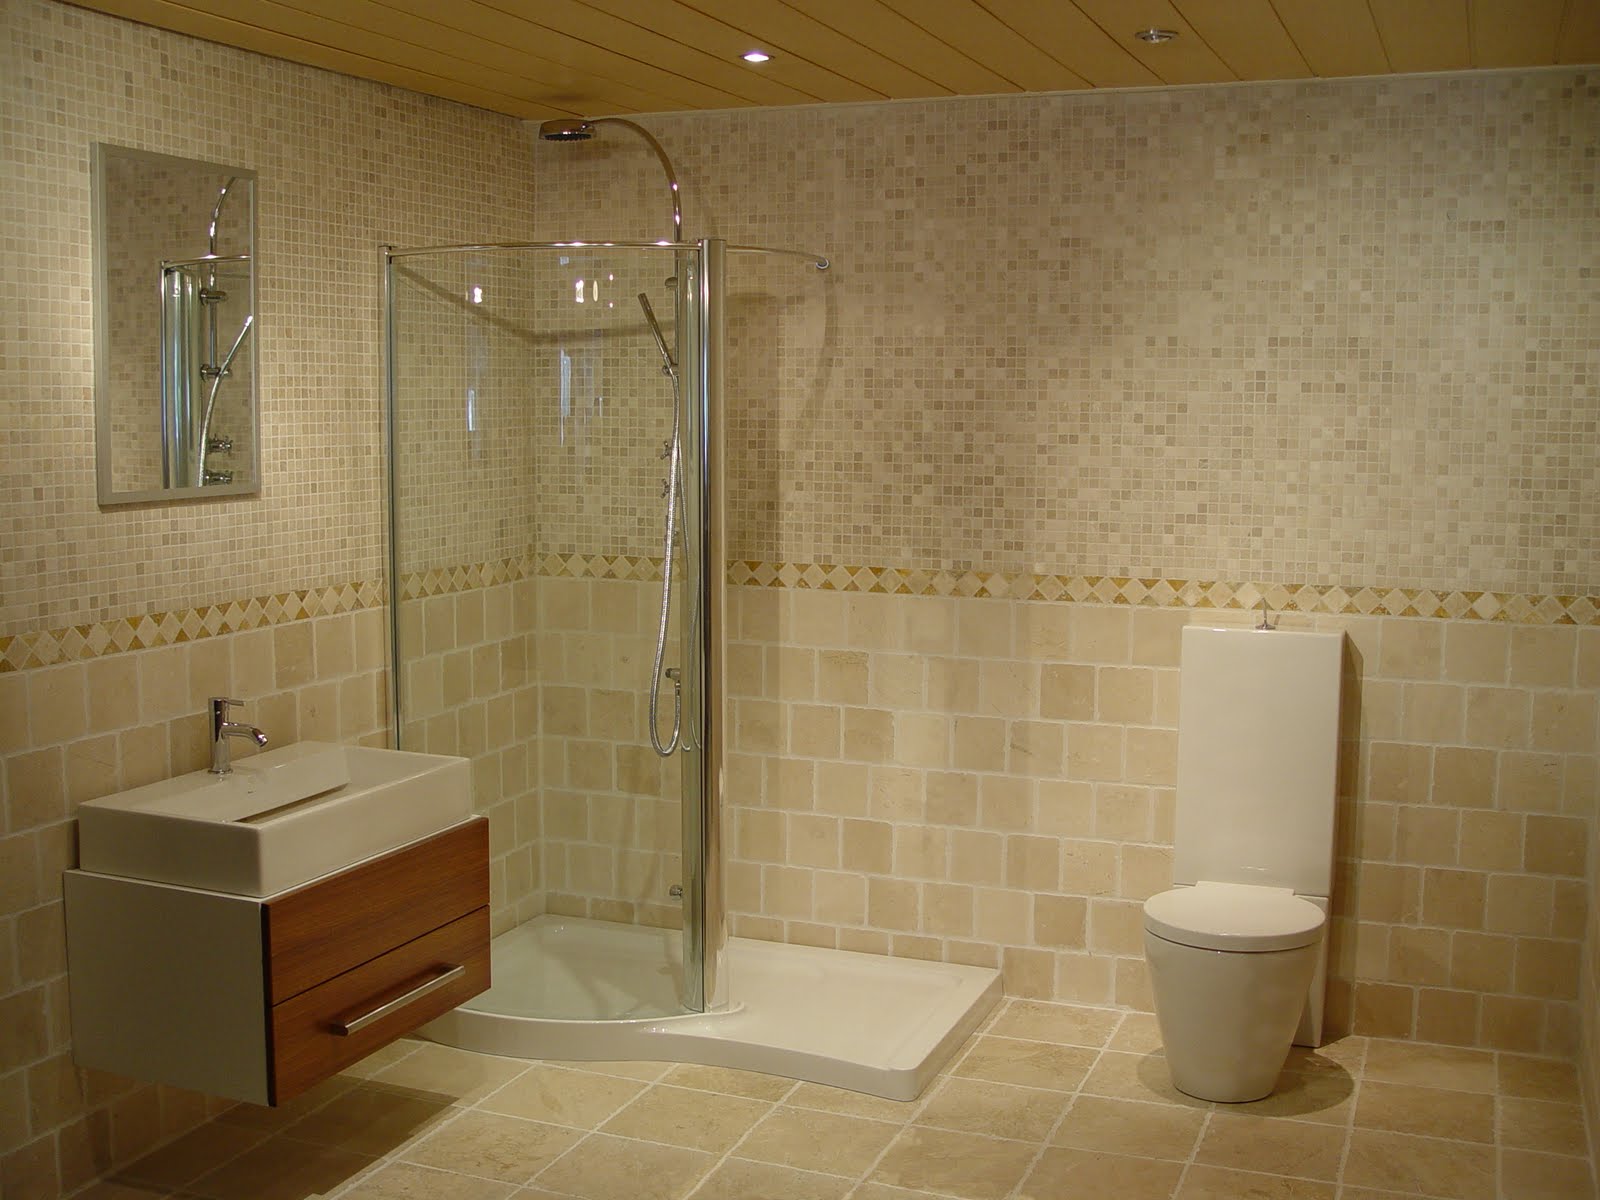 Bathroom Wall Tile Design Ideas